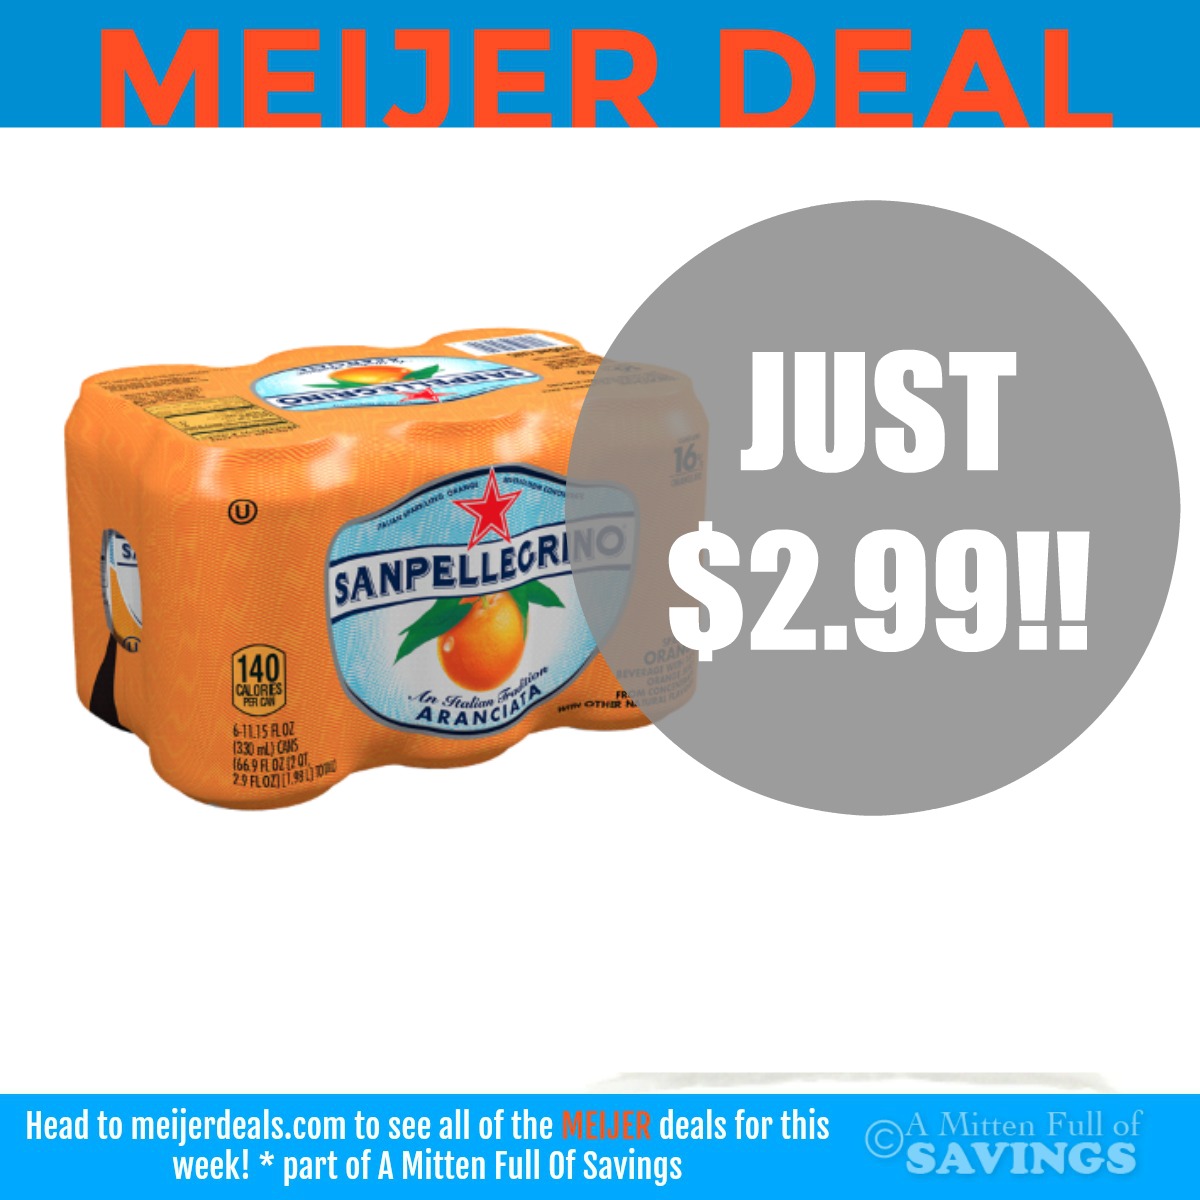 RARE coupon for Sanpellegrino + Meijer Deal